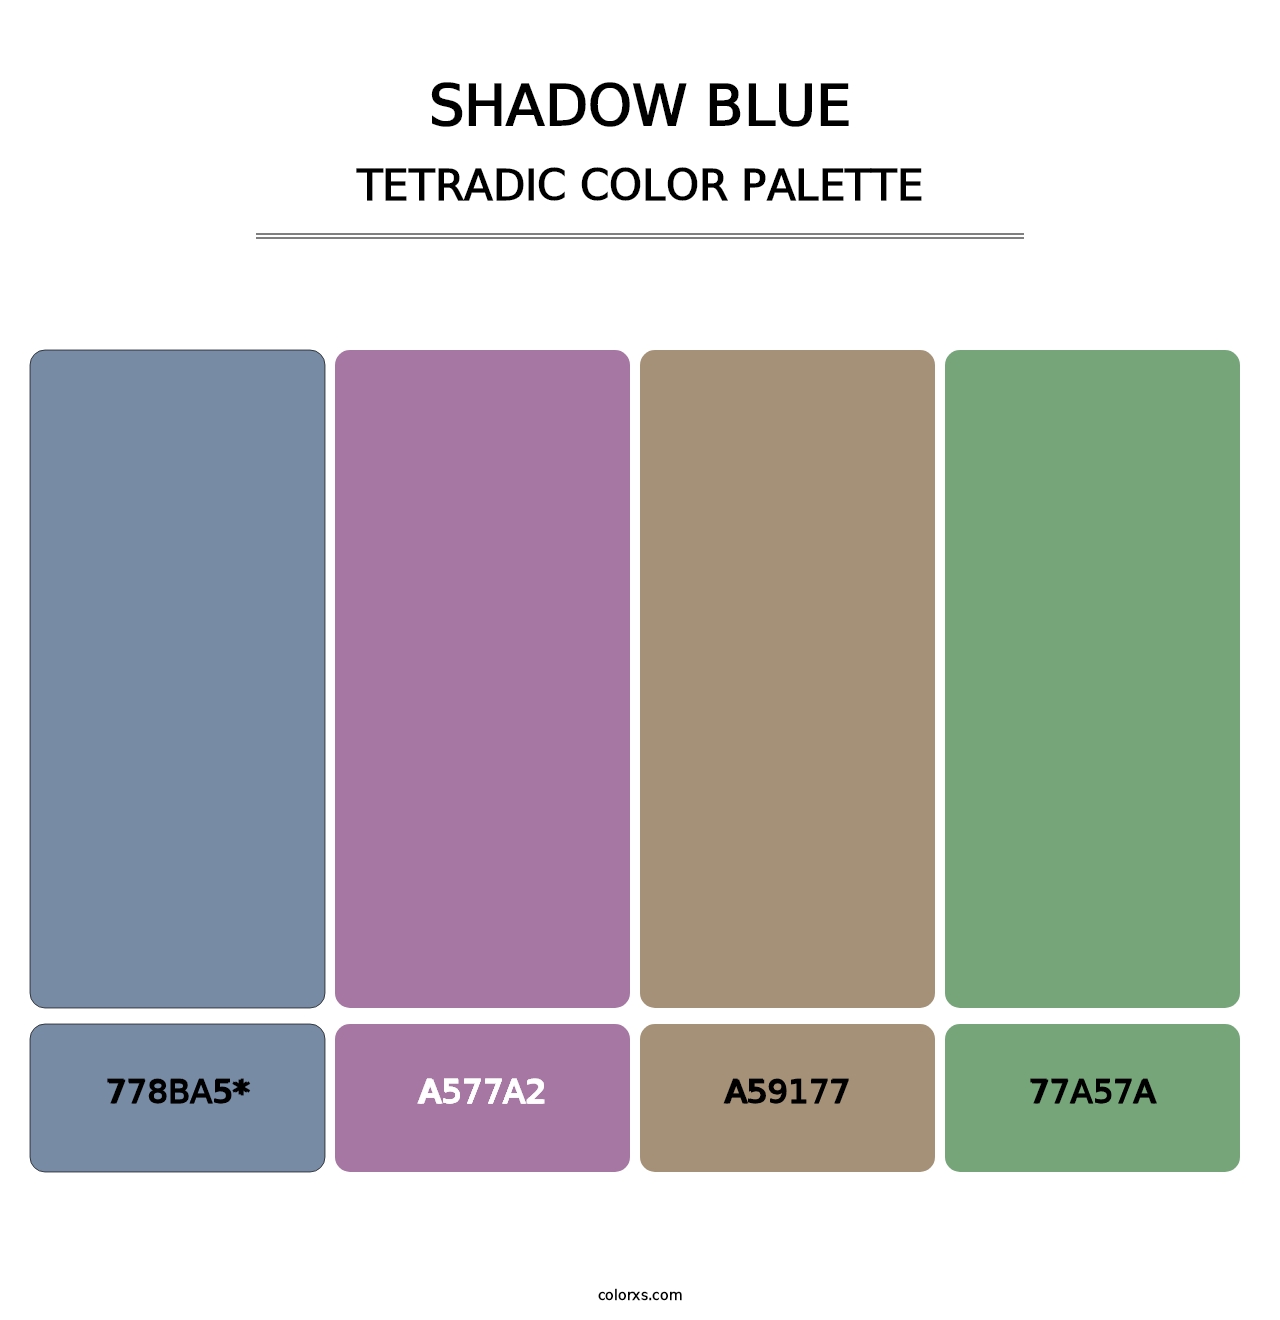 Shadow Blue - Tetradic Color Palette